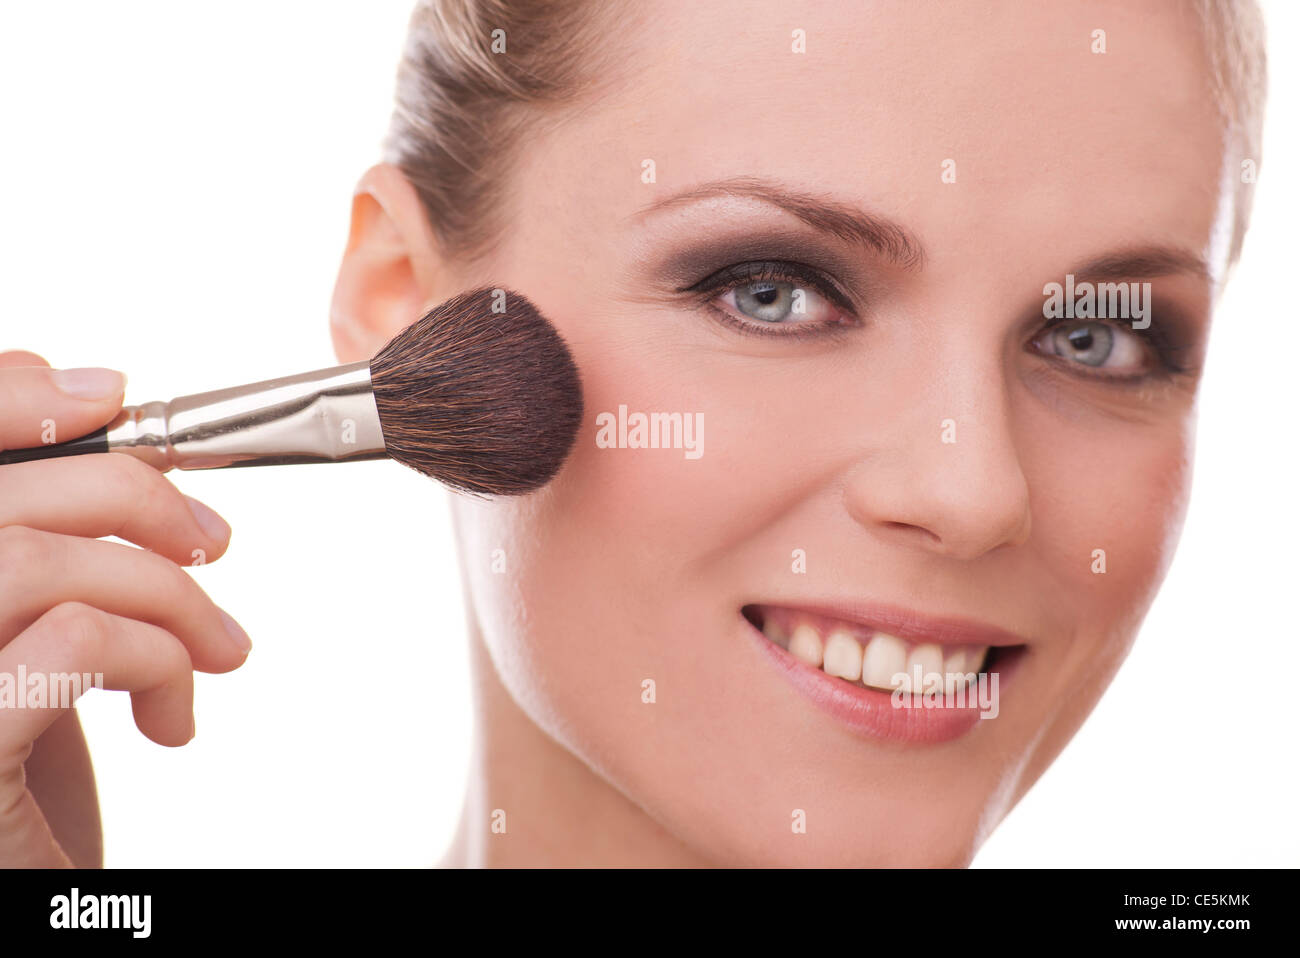 woman applying blush with a blusher brush make up Stock Photo